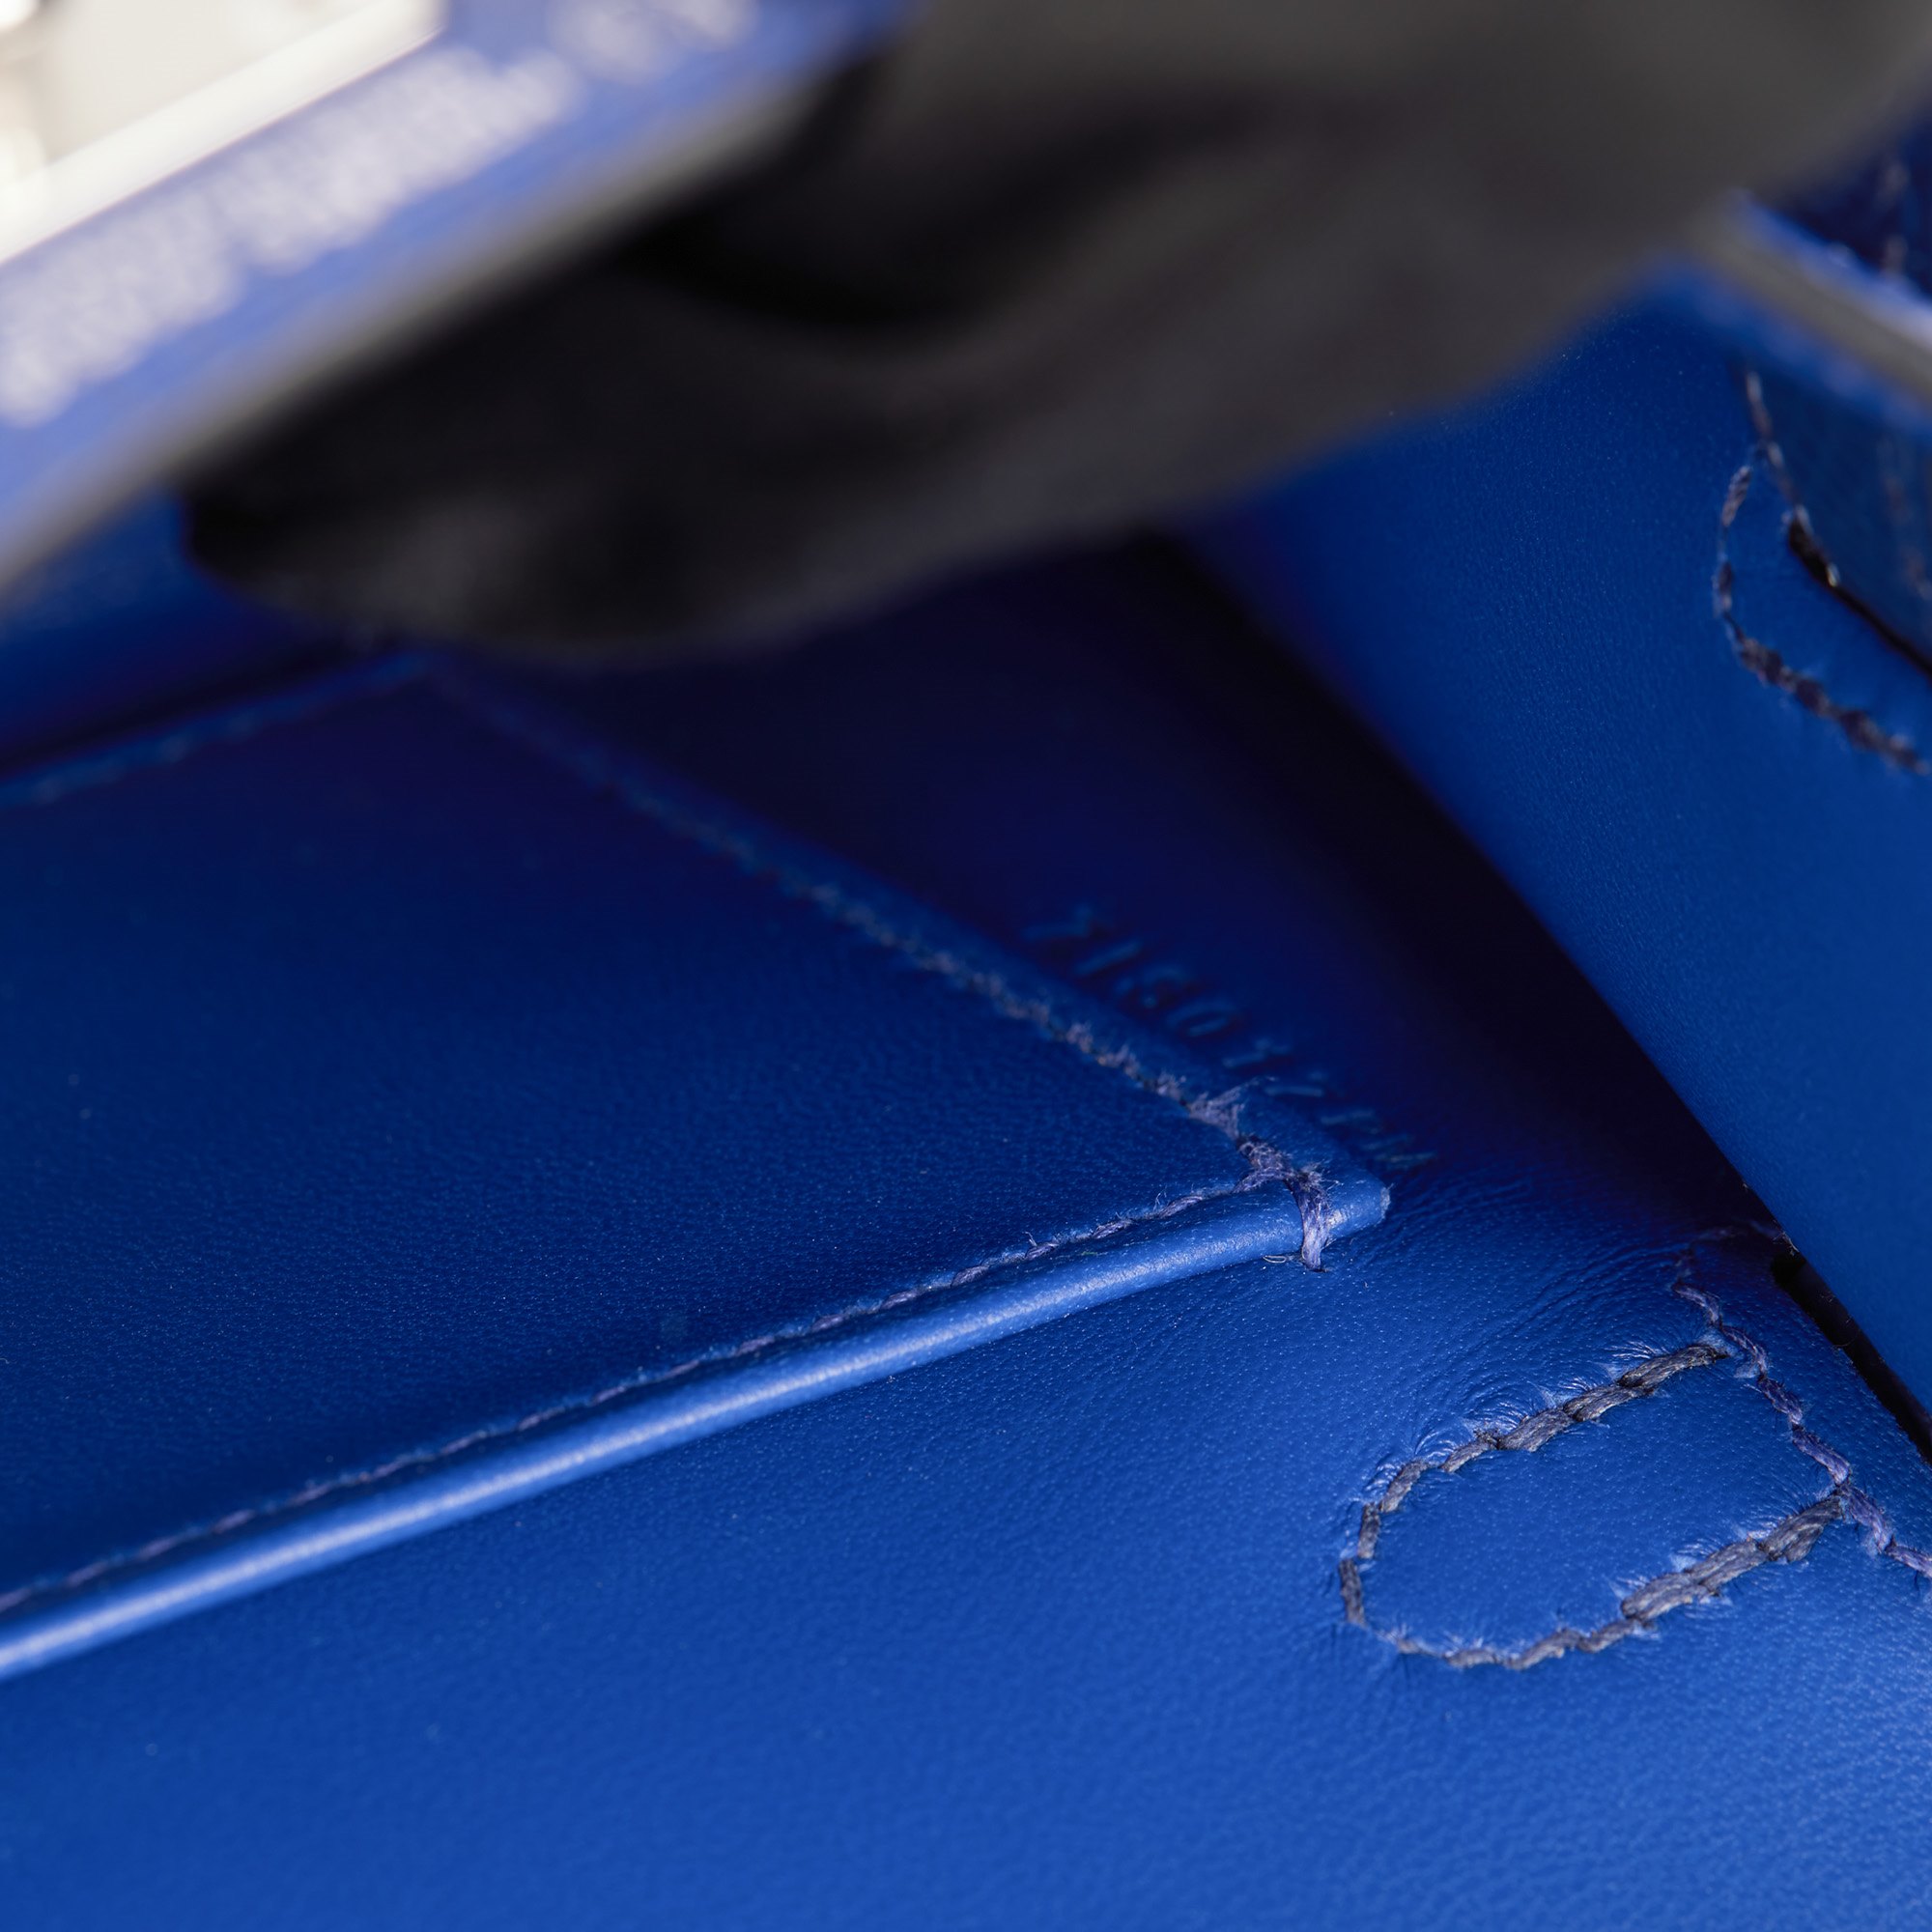 Hermès Blue Electric & Blue Saphir Epsom Leather HSS Special Order Kelly 20cm II Sellier